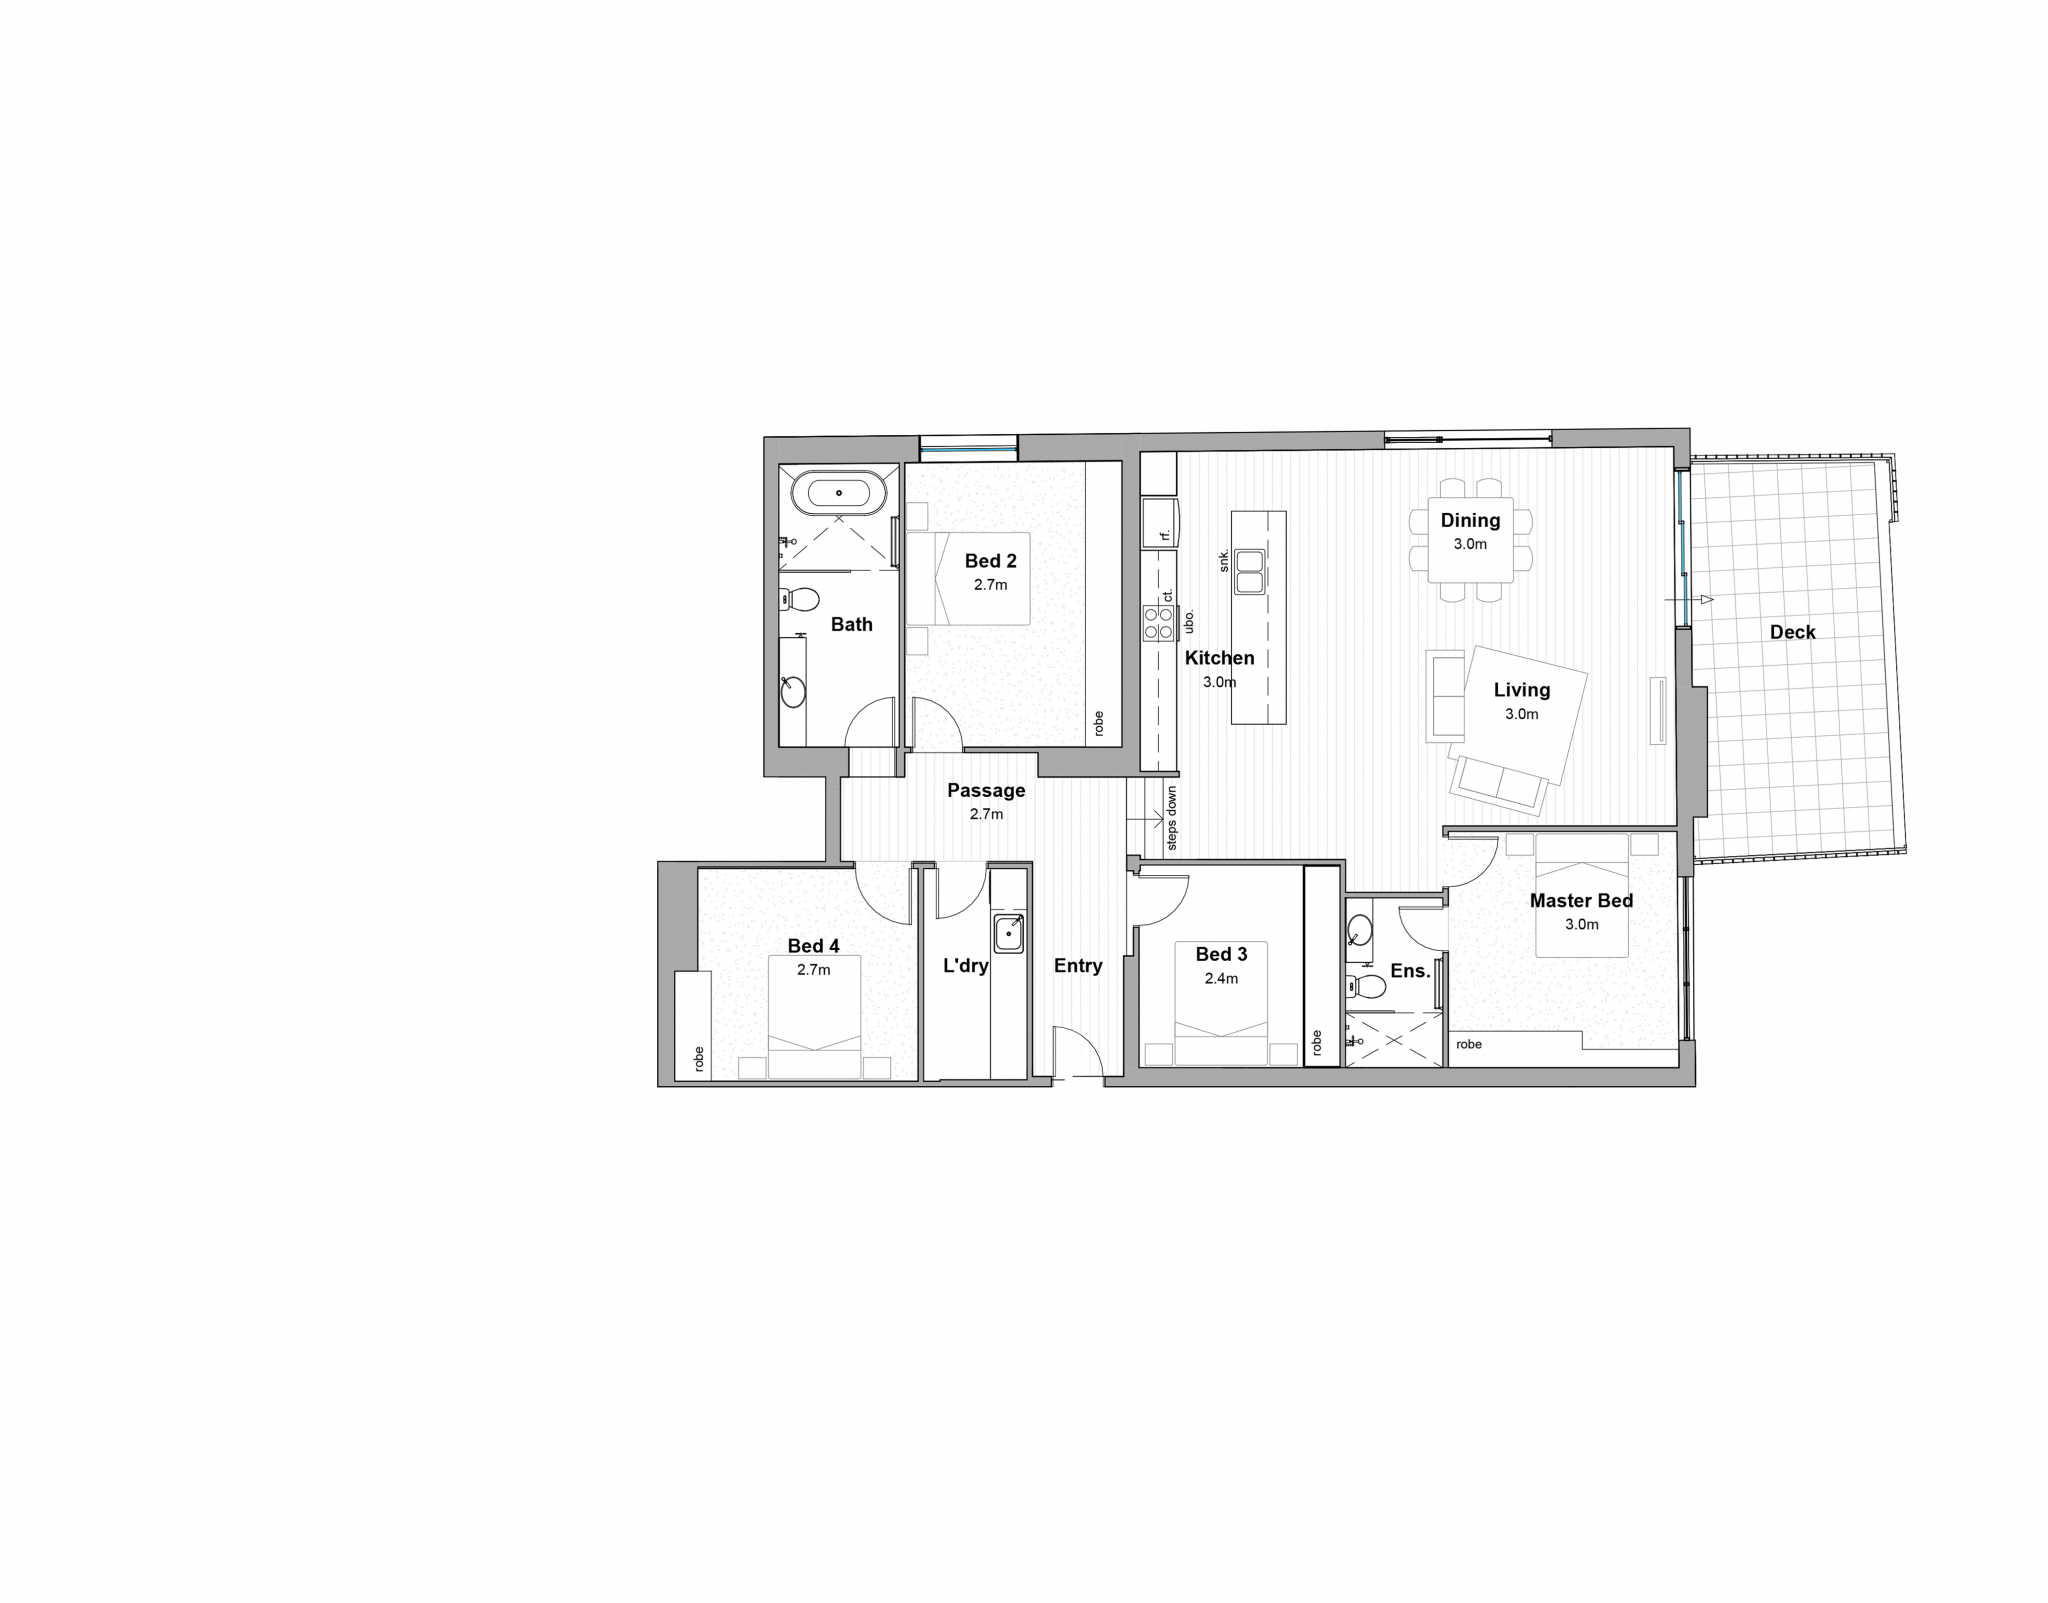 Apartment 3 Floorplan